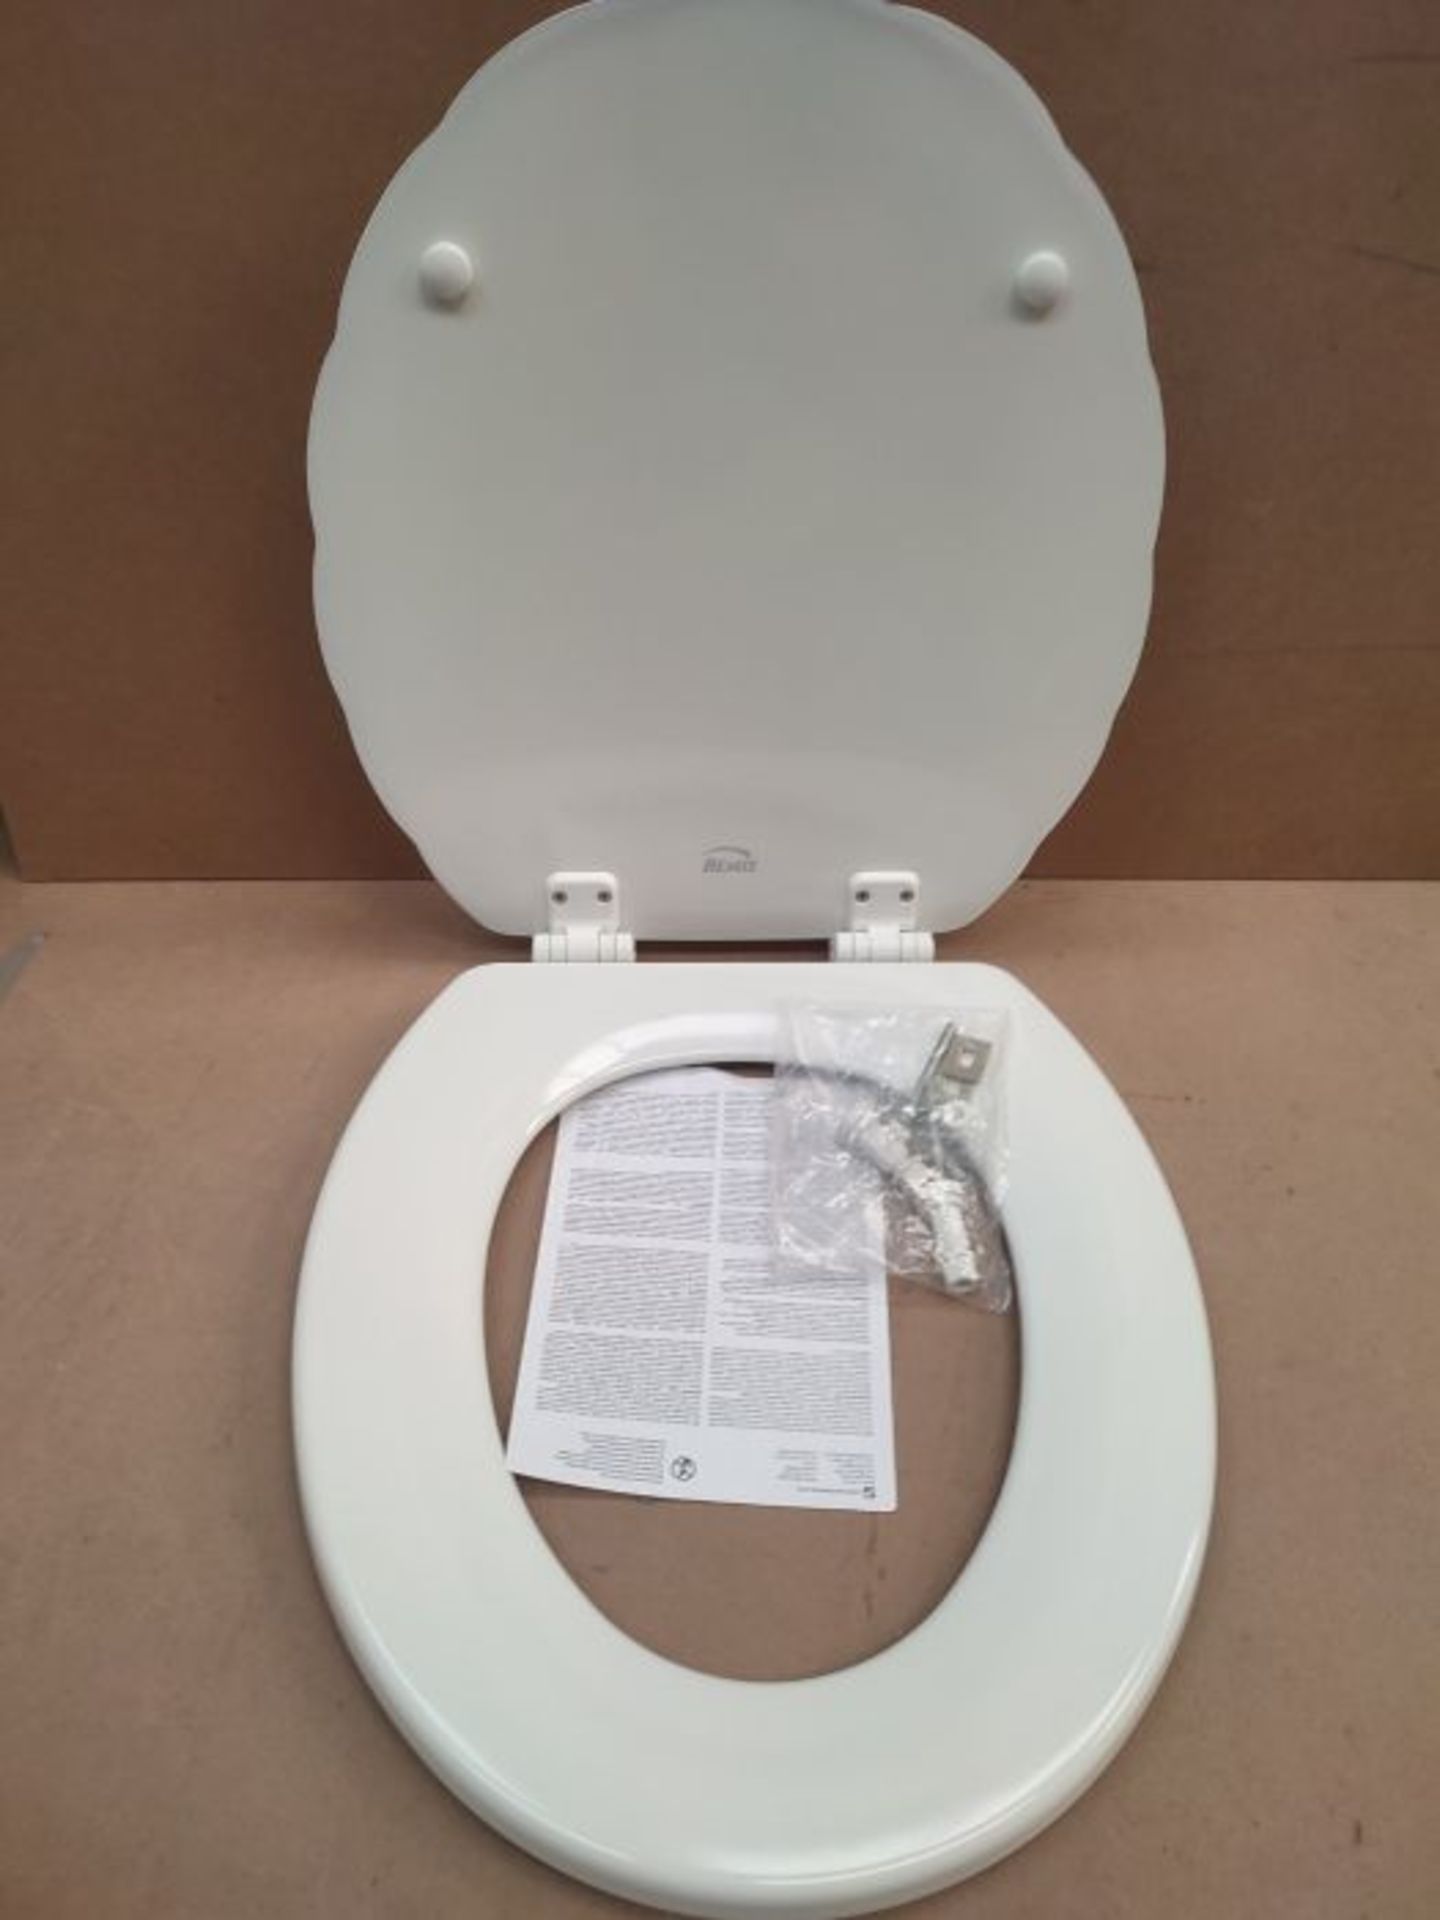 Bemis 5900ZART000 Shell Toilet Seat, White - Image 2 of 2